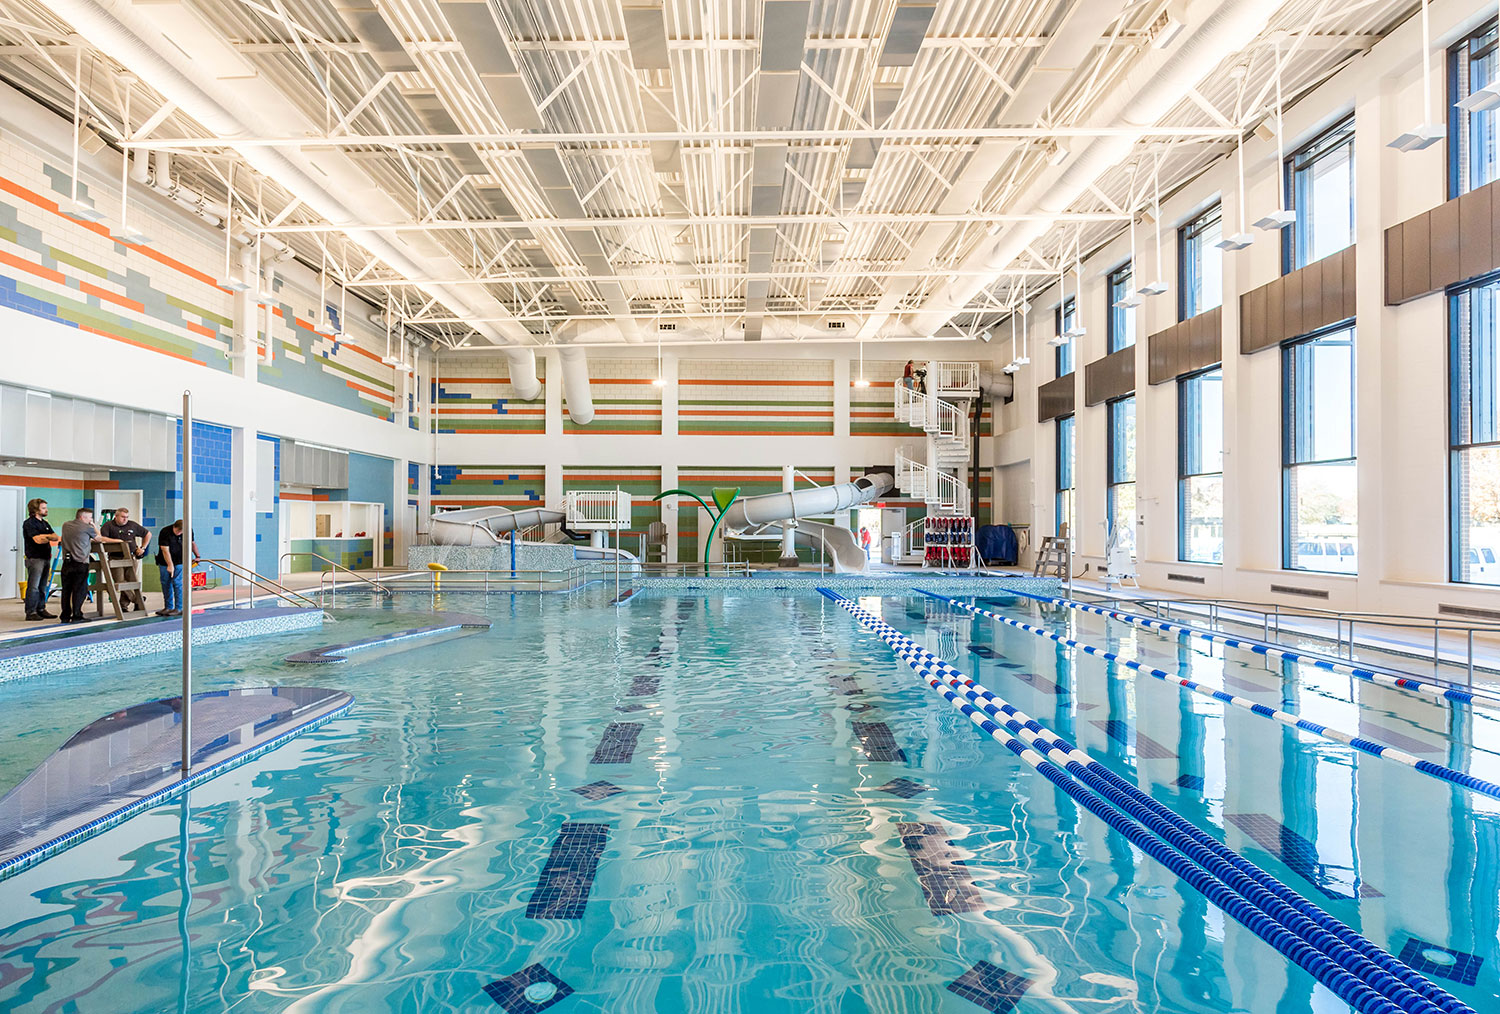 Carpenter Park Recreation Center Opens New Indoor Pool - Plano Magazine1500 x 1014